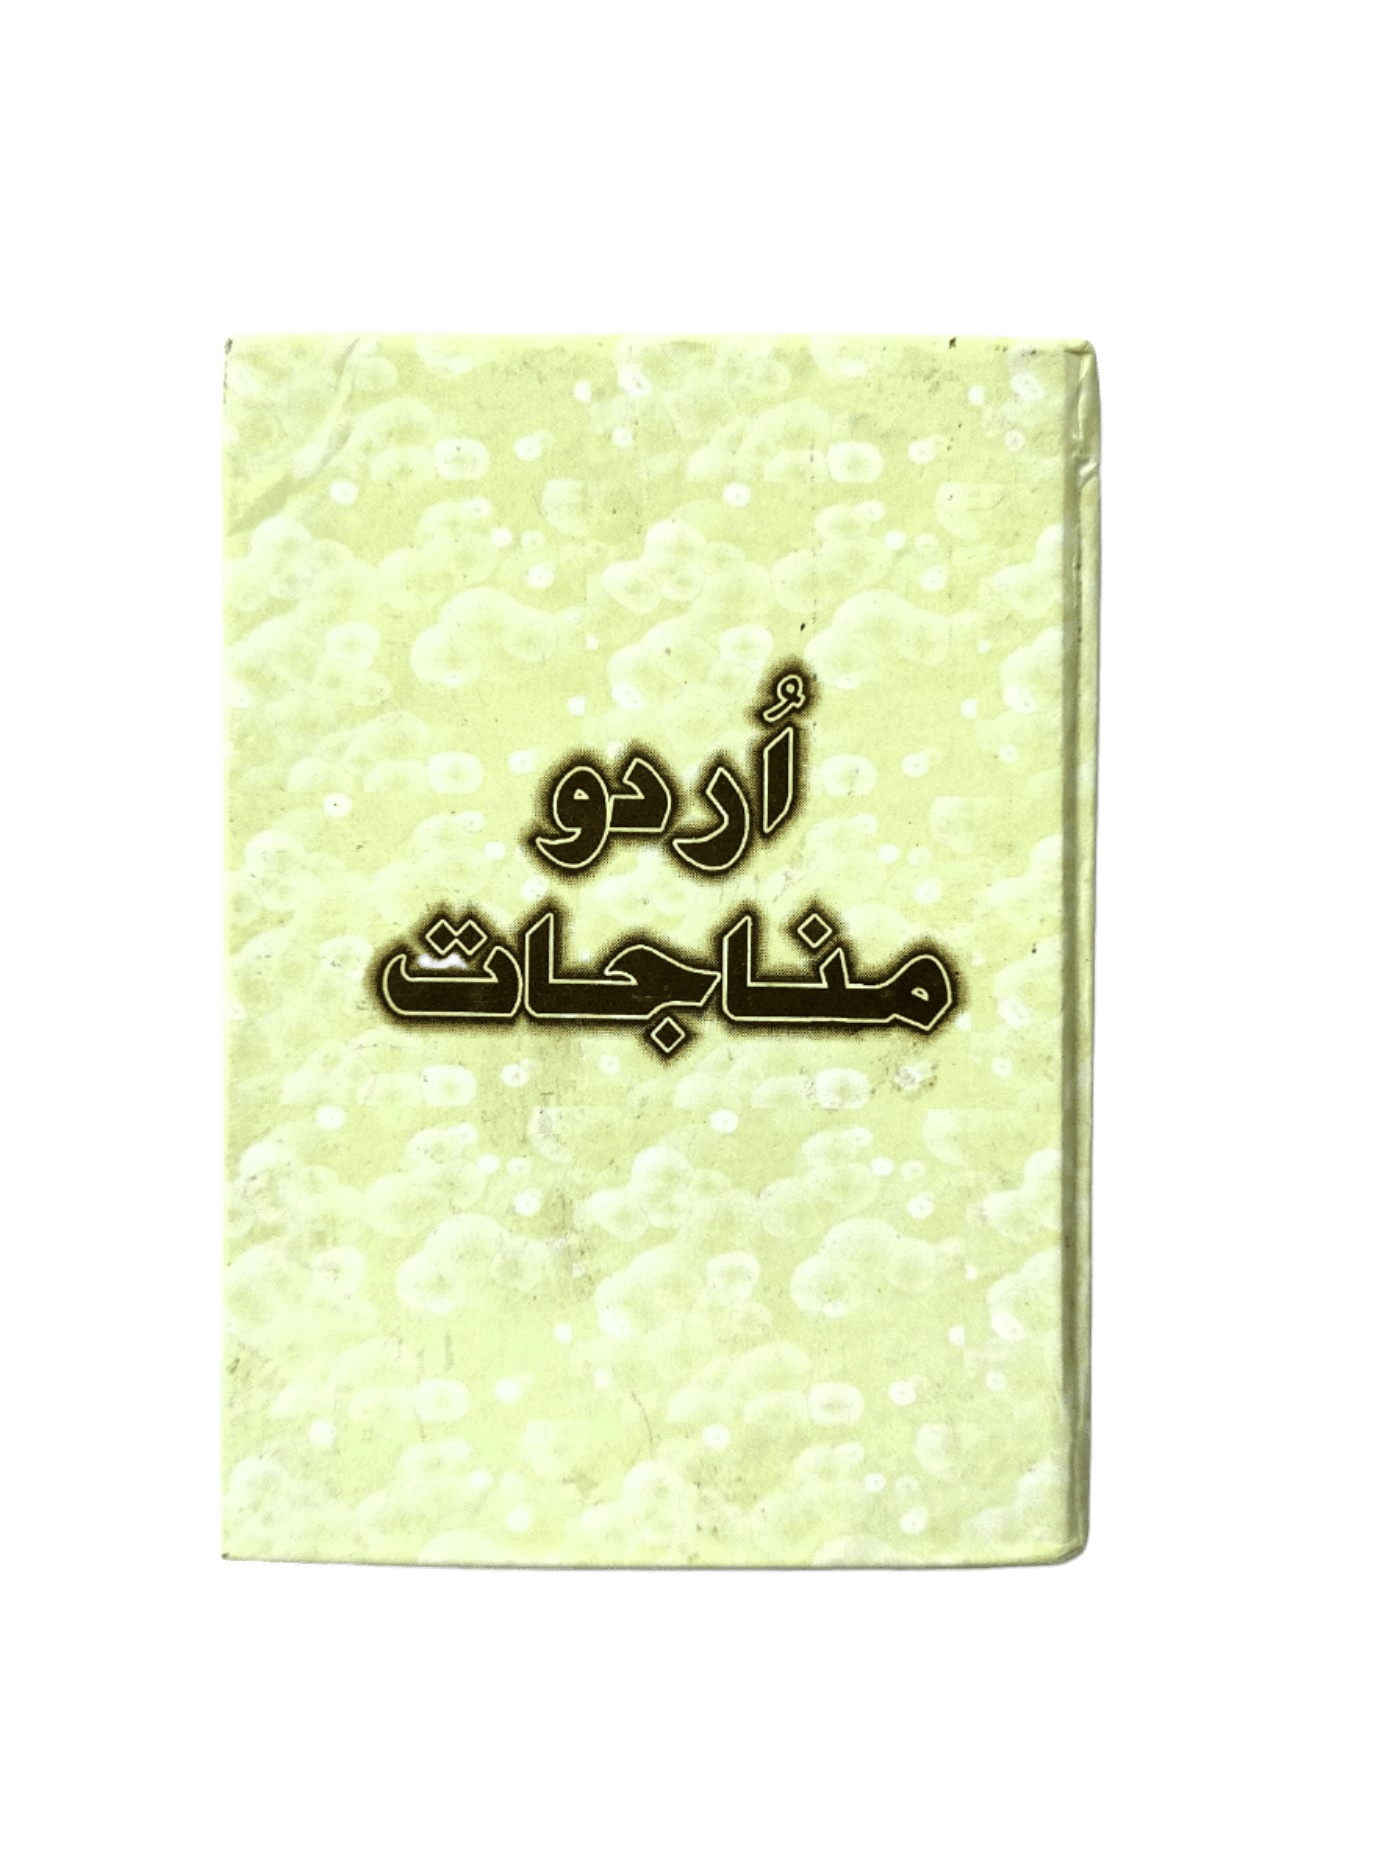 Urdu Manaja'at (Urdu Prayers) - KHAJISTAN™